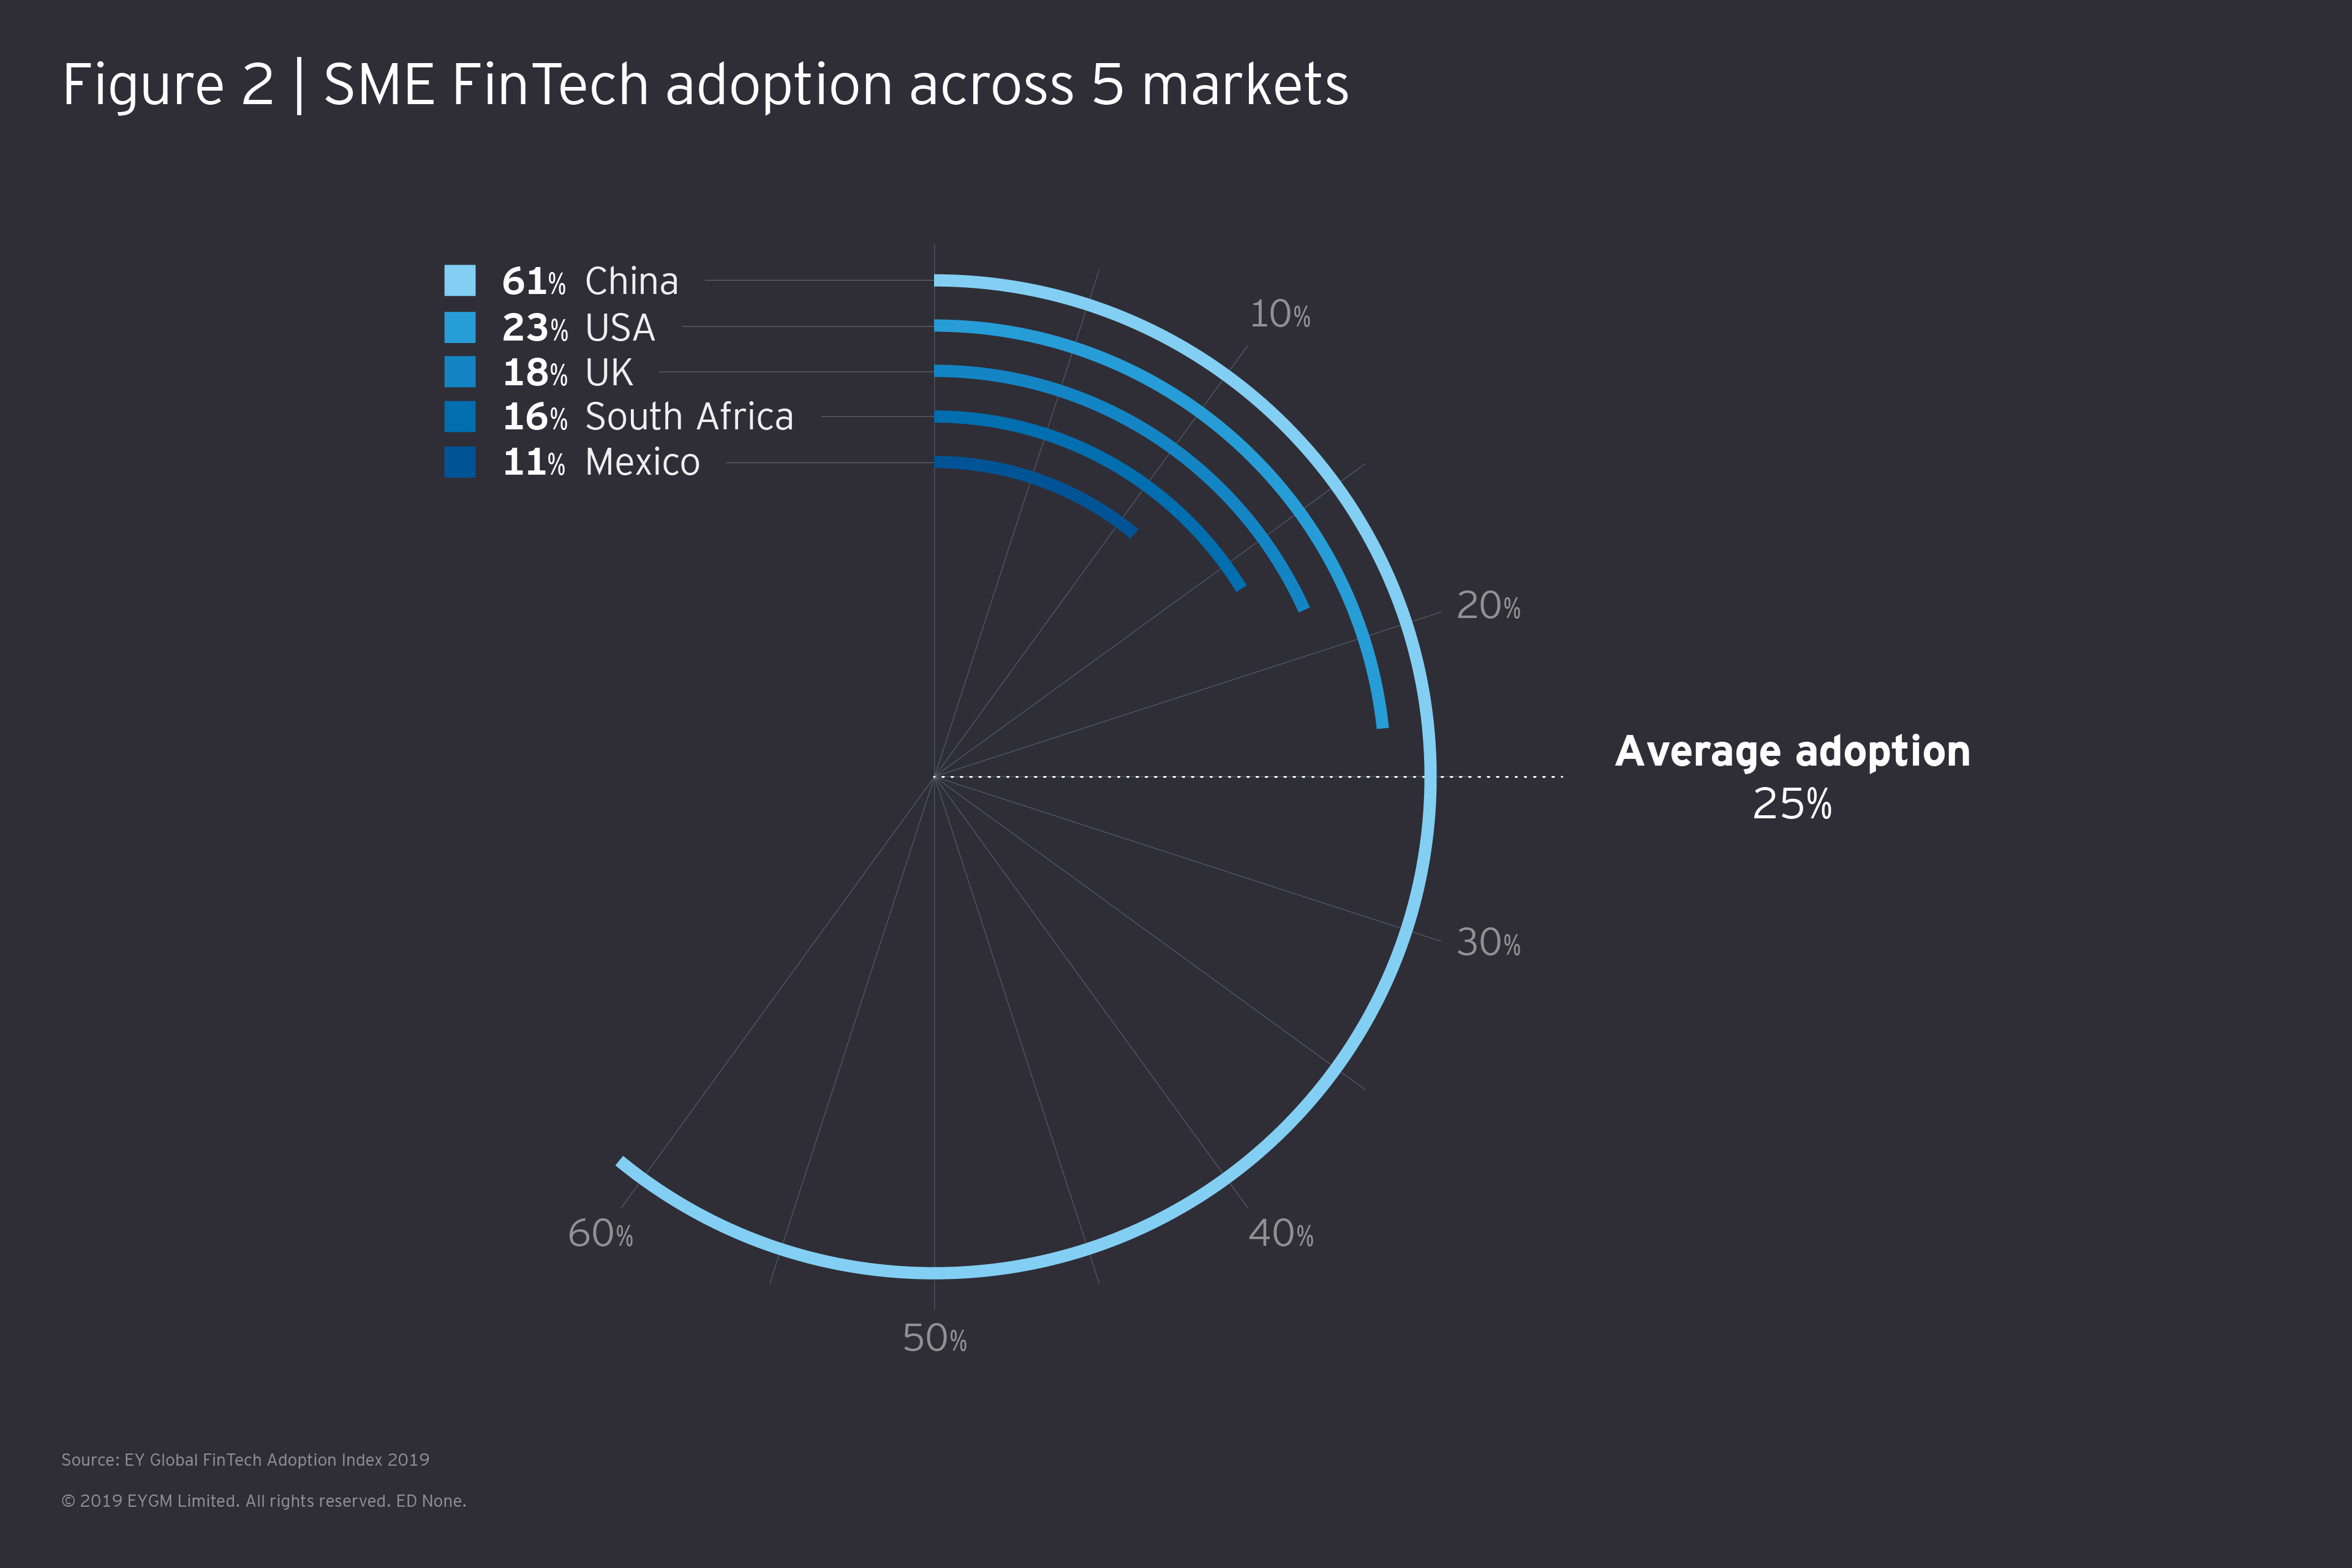 SME FinTech adoption across 5 markets info graph